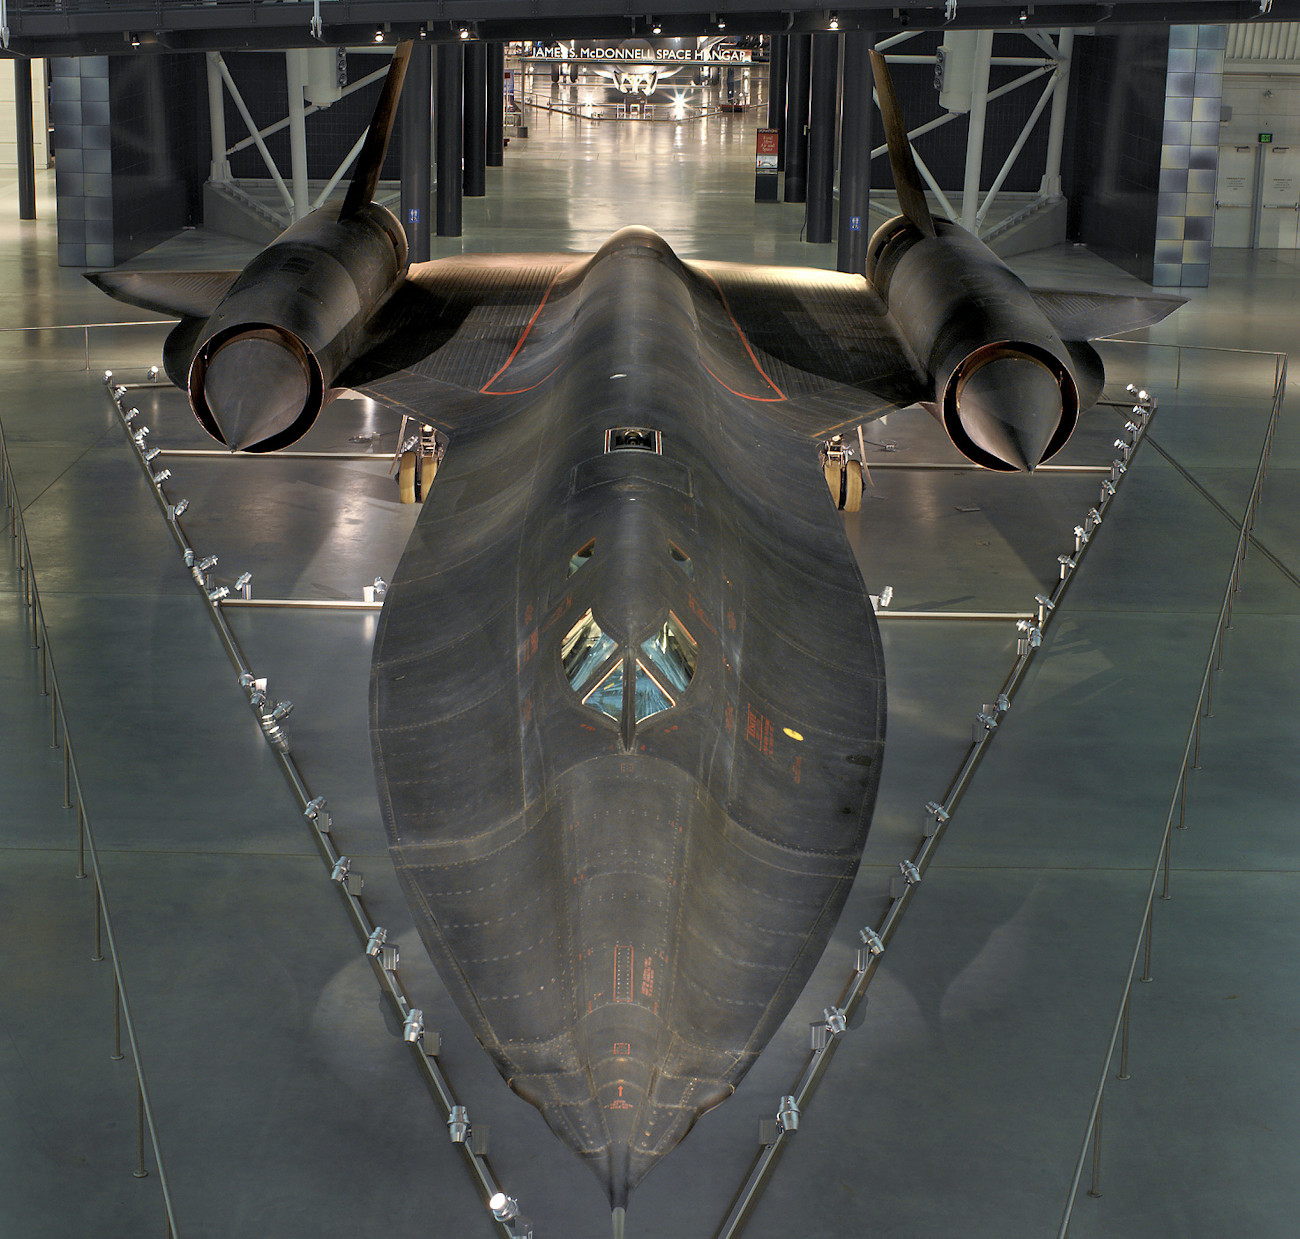 Lockheed SR-71 Blackbird - Air and Space Museum